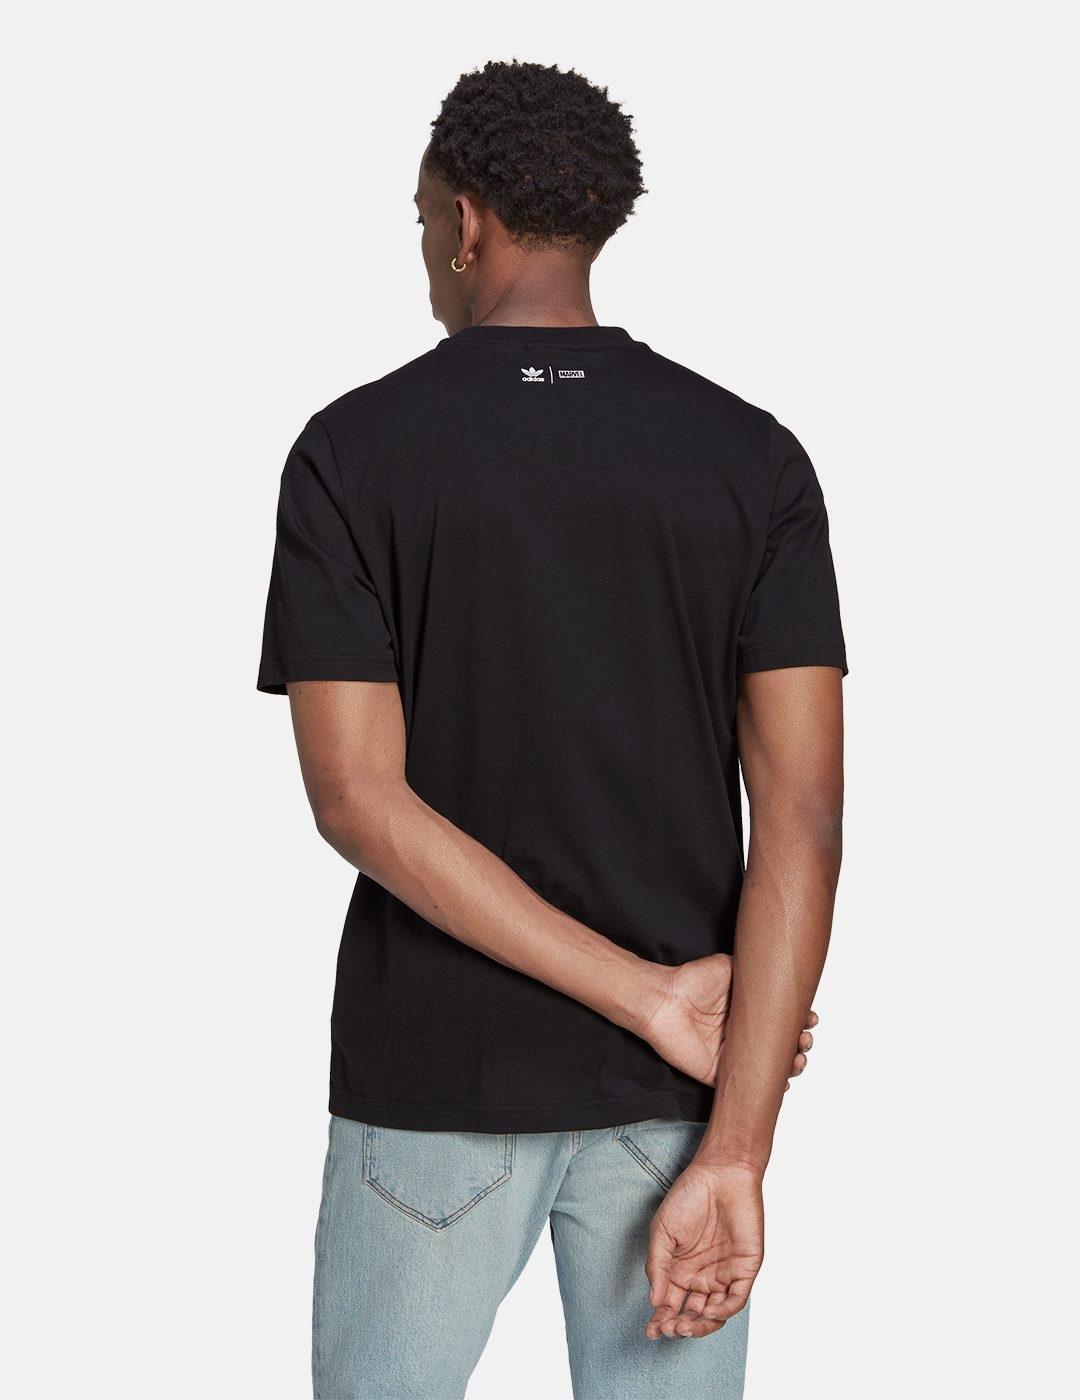 Camiseta adidas Disney Graphic Negro Para Hombre